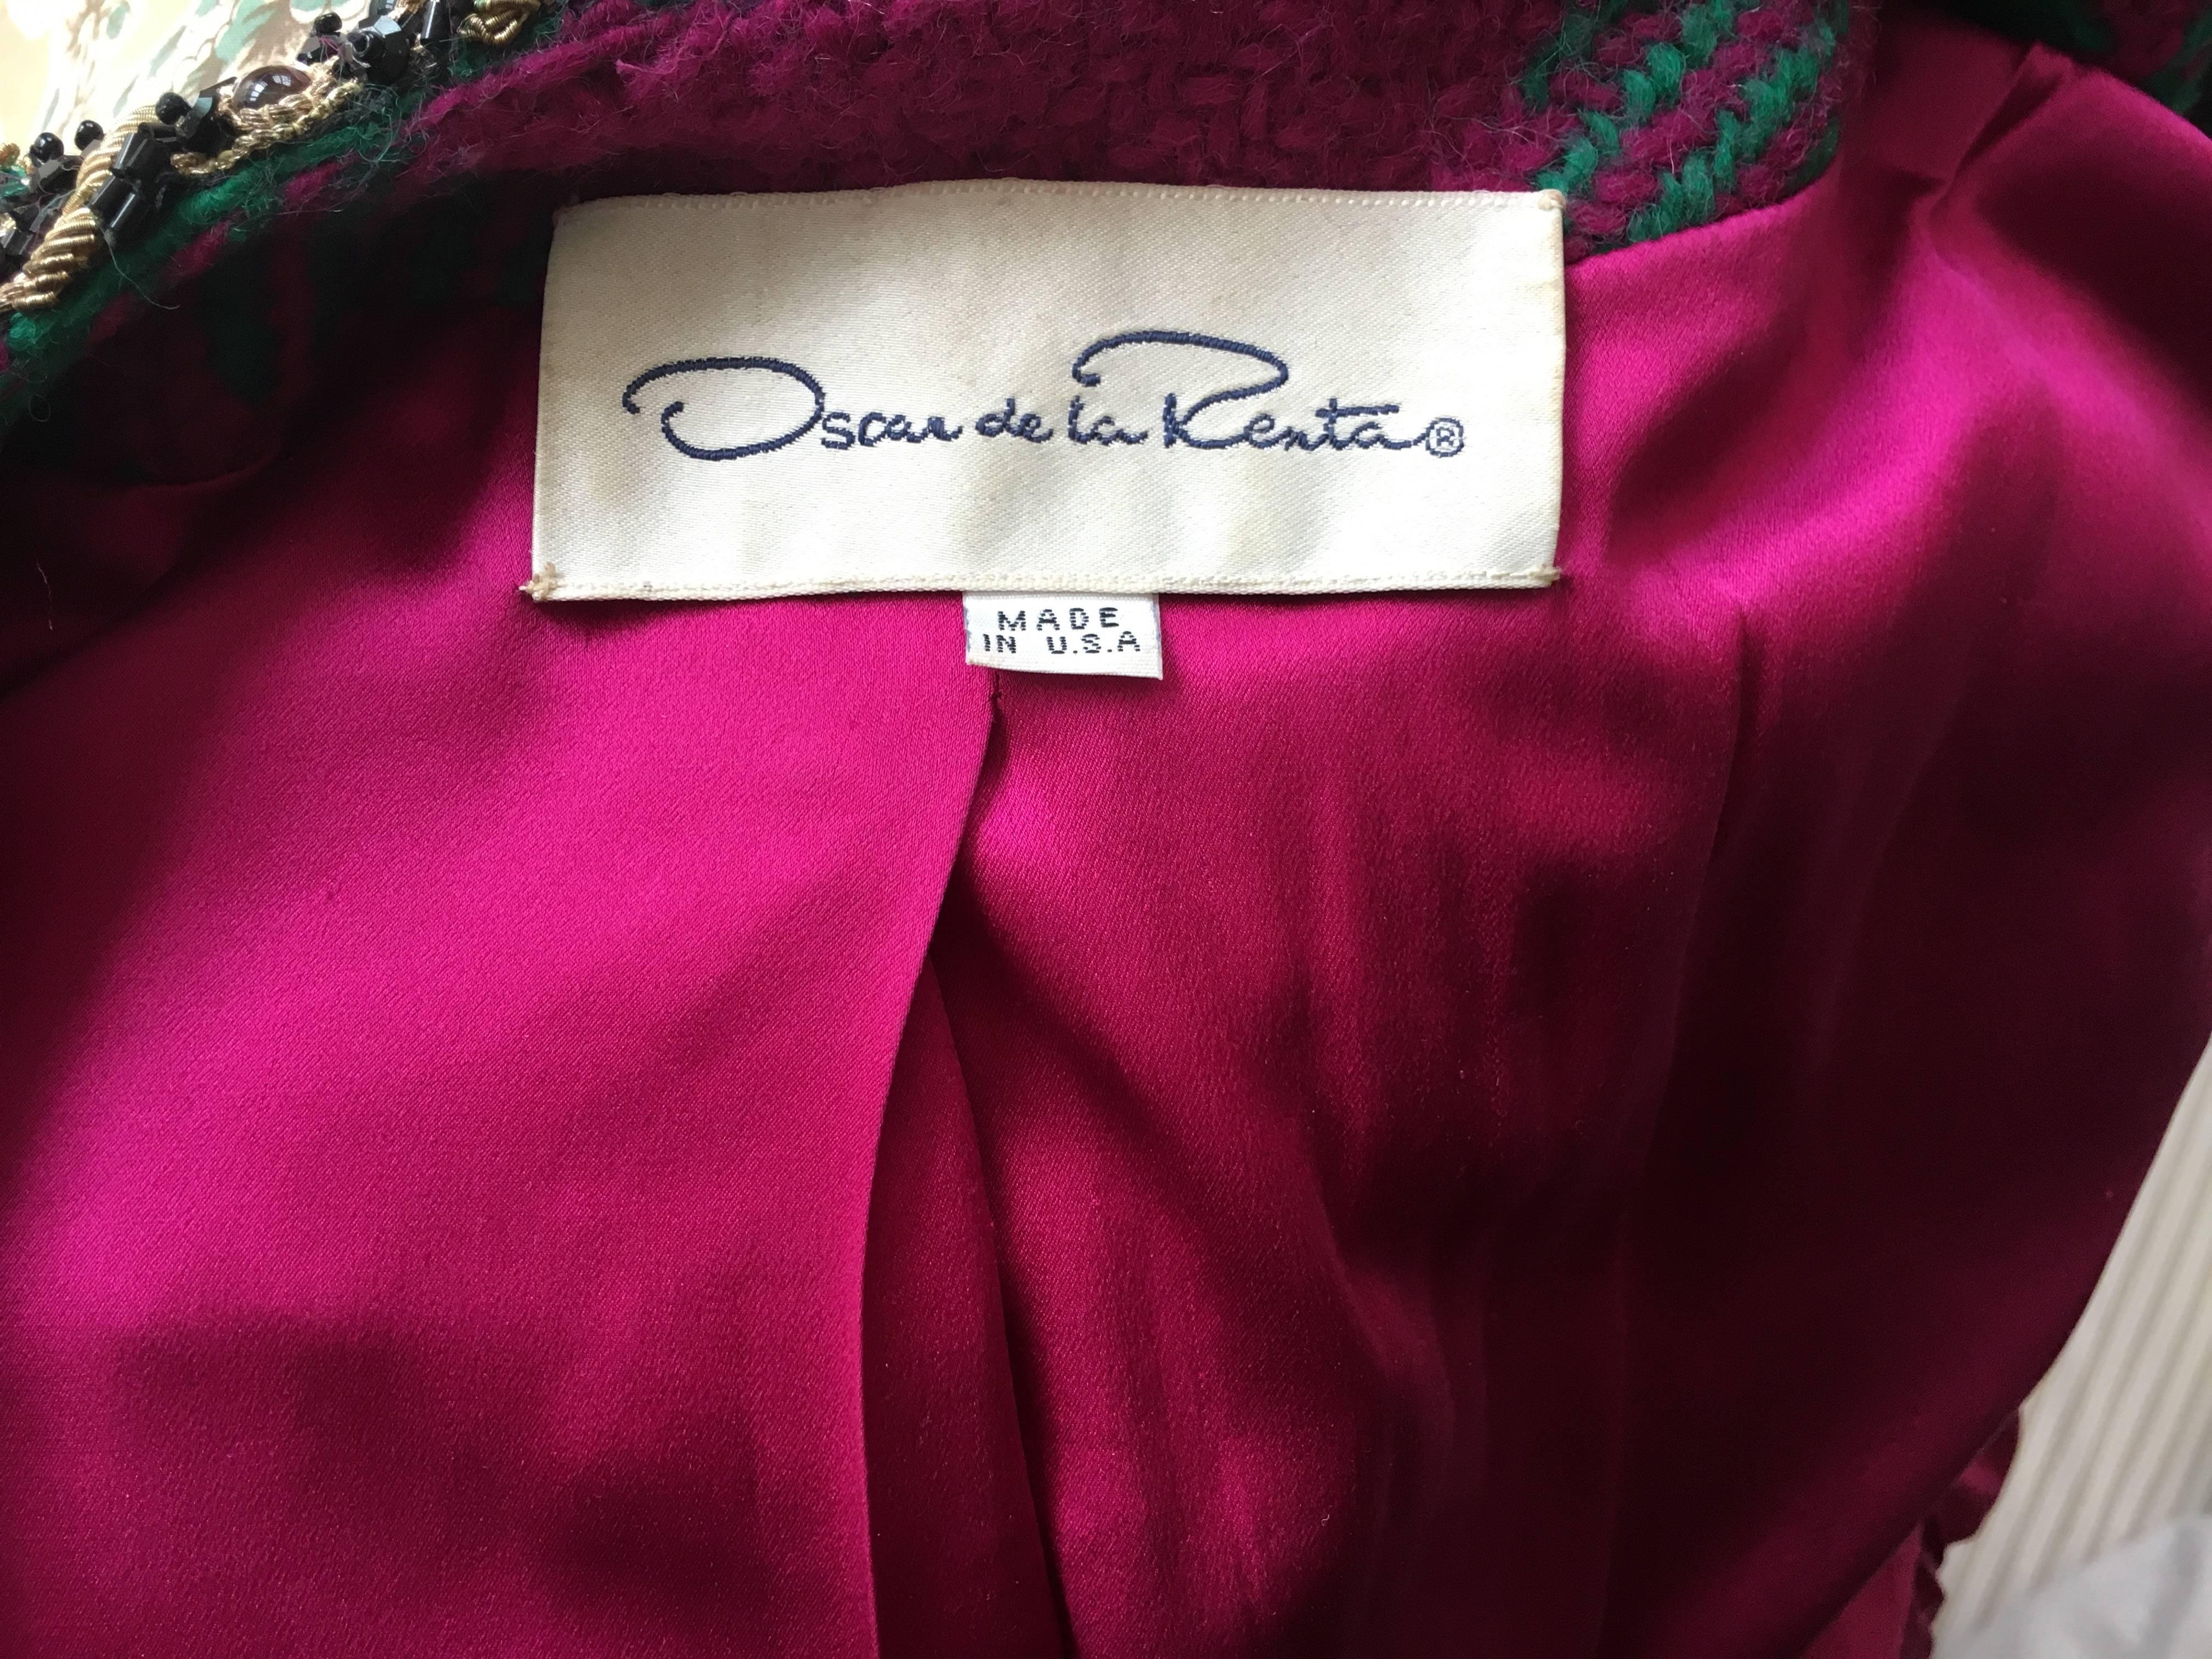 Oscar de la Renta 1980's Museum Exhibited Jewel Embellished Plaid Suit  For Sale 3